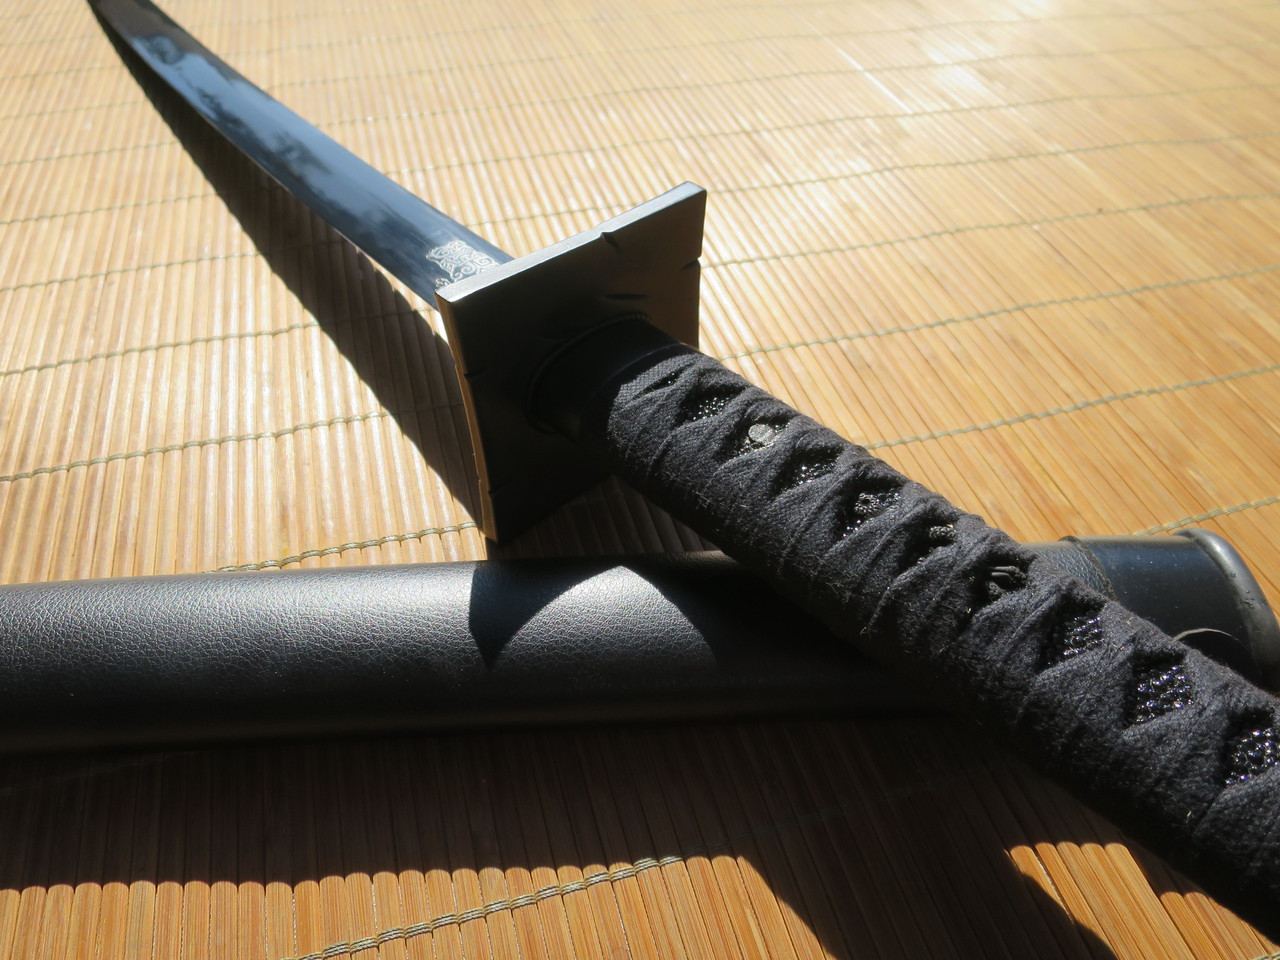 Hanzo Steel #3 Black Out Ninja Assassian Sword